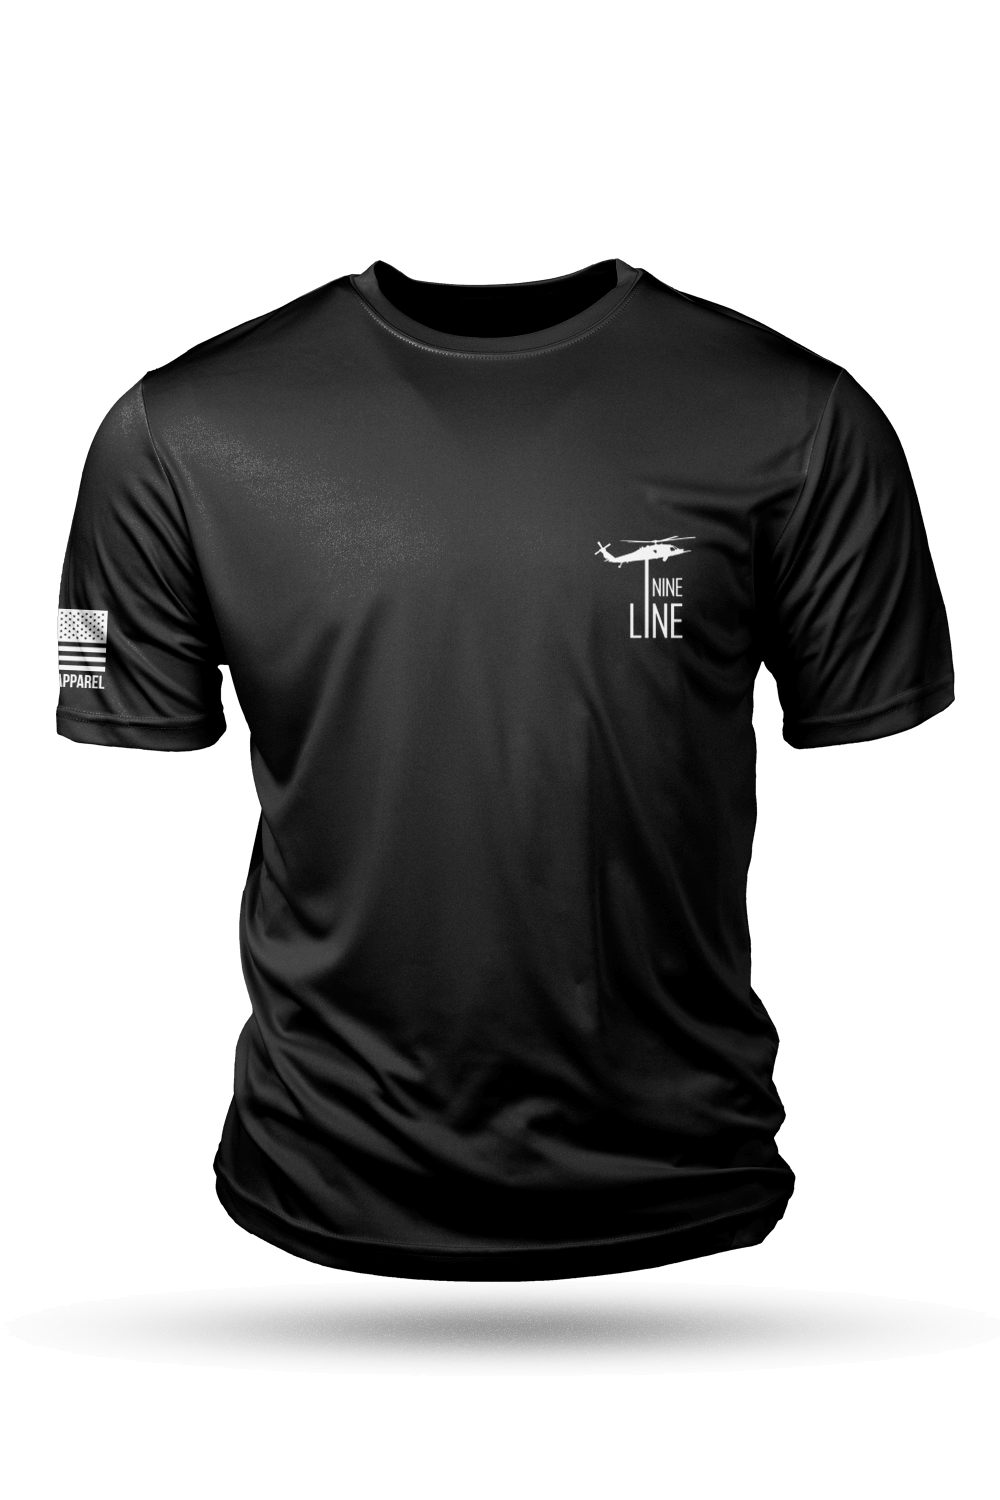 Men's Moisture Wicking T-Shirt - 5 Things - Nine Line Apparel